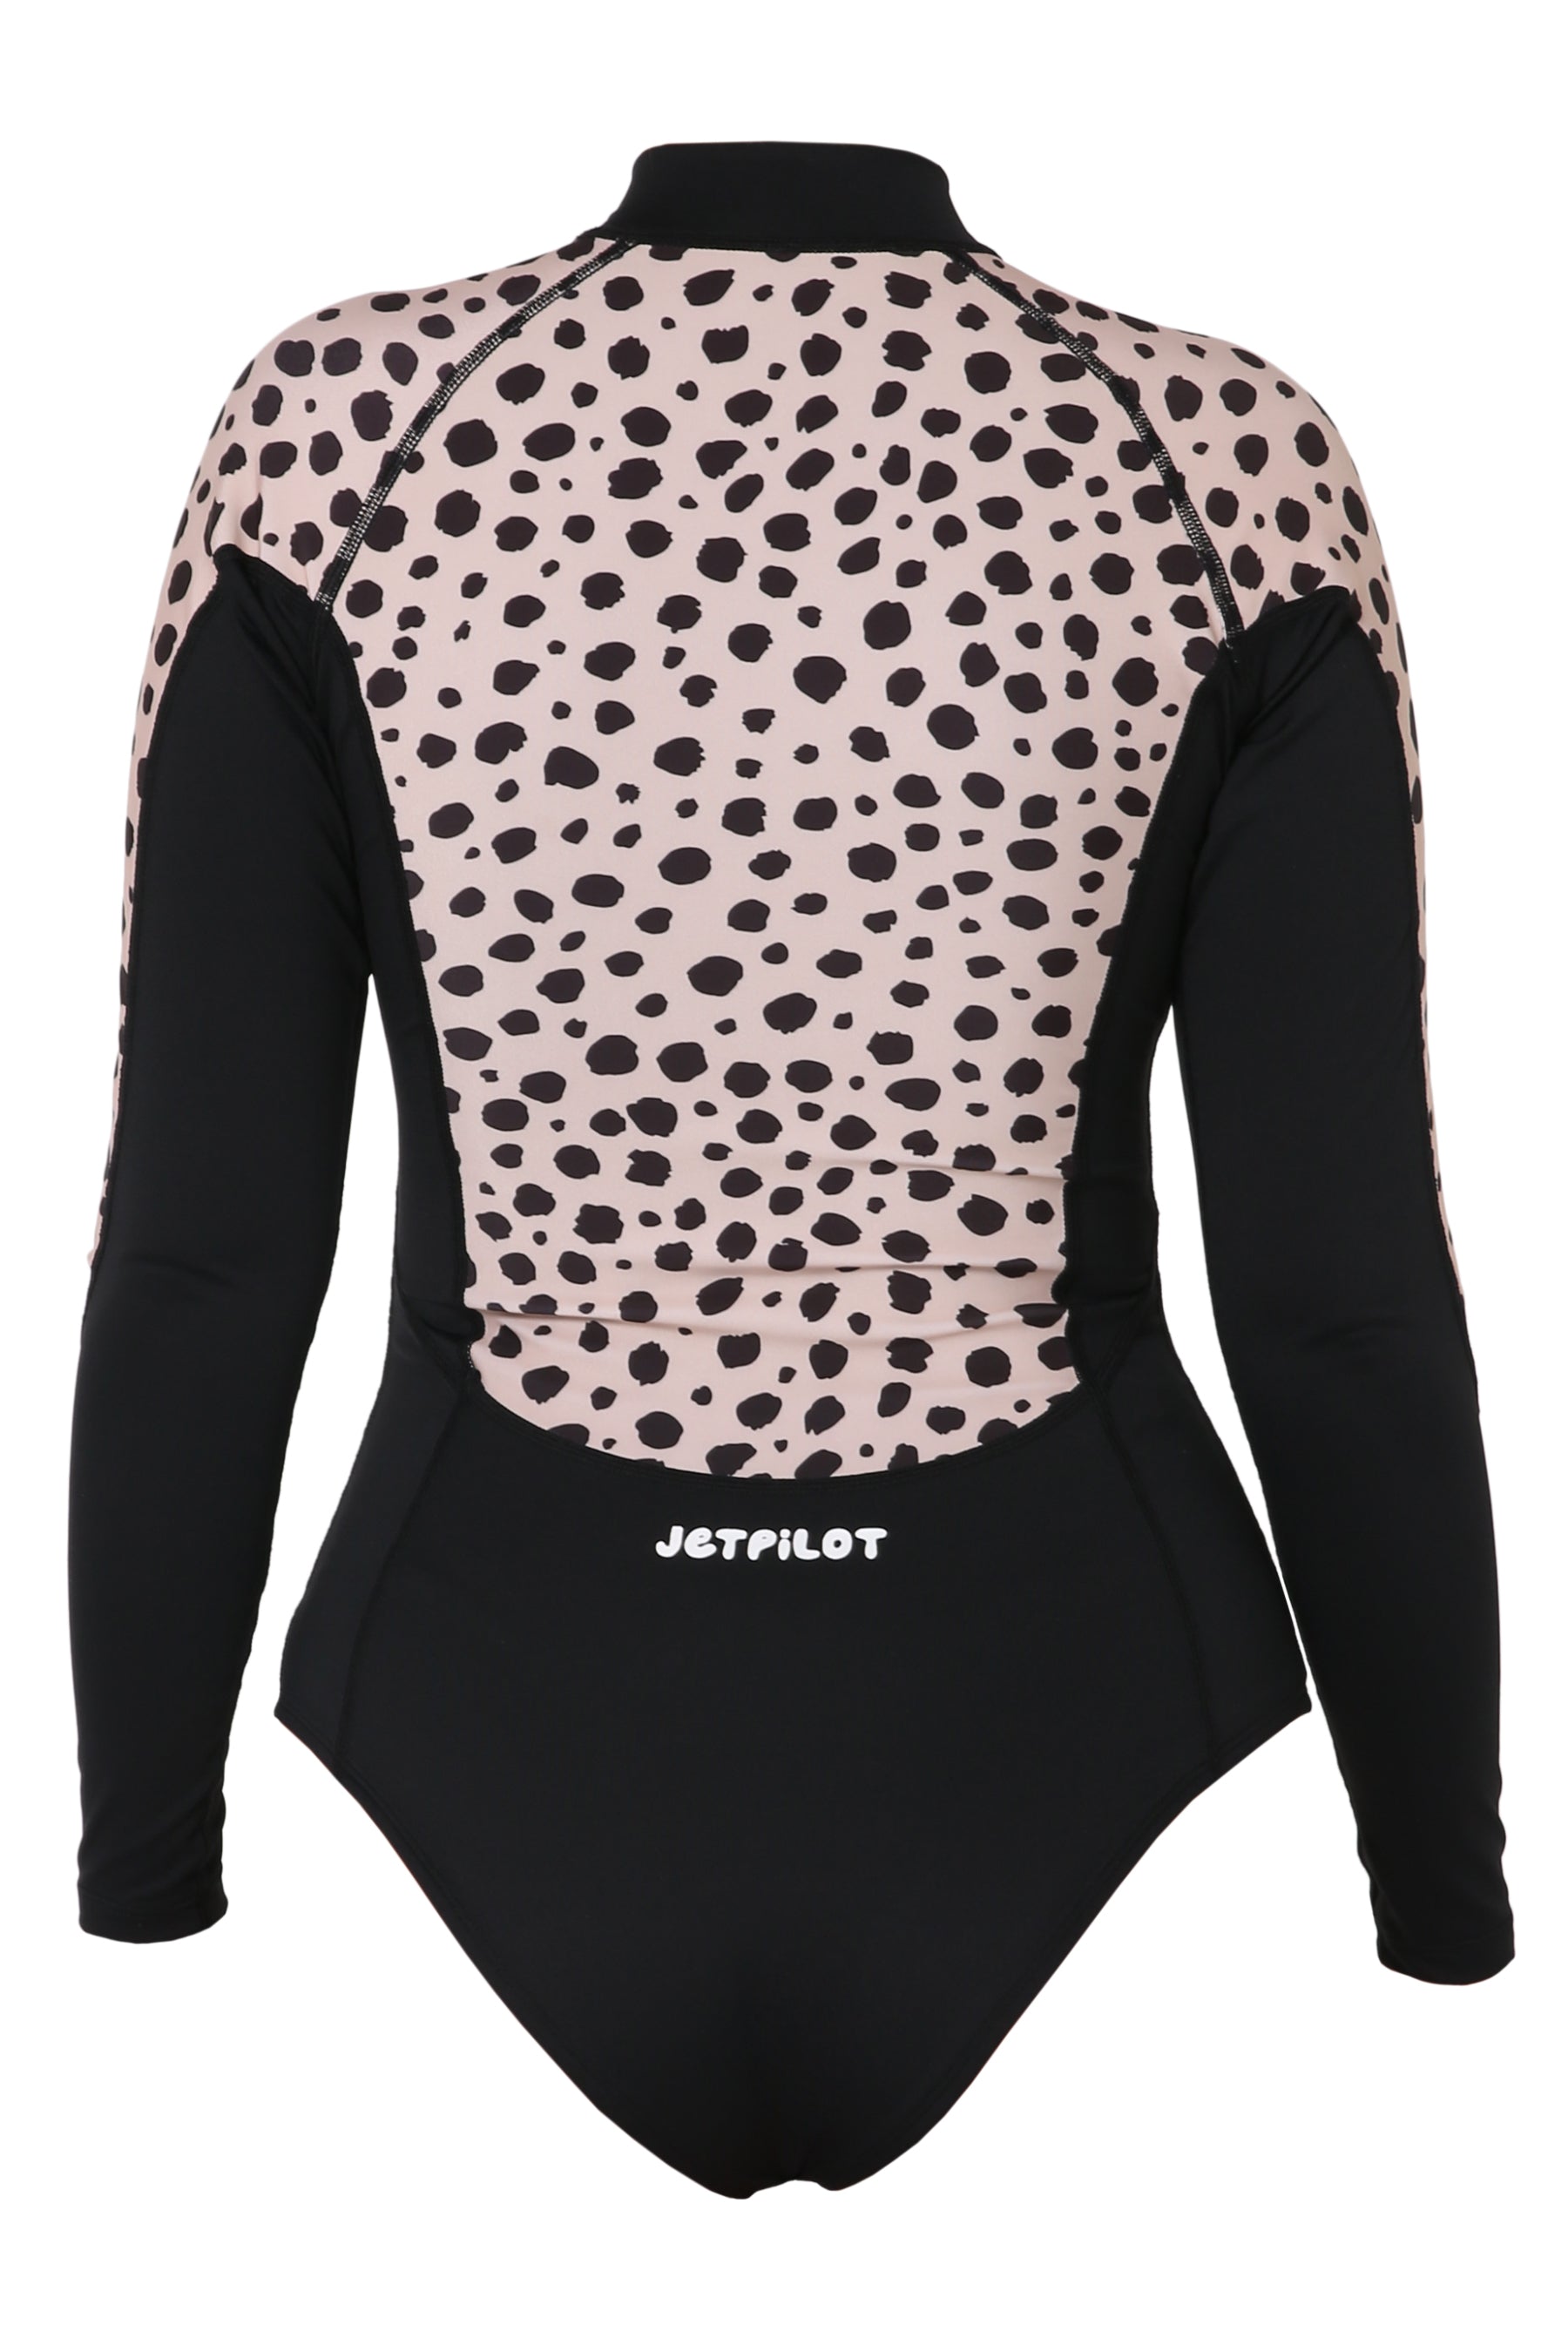 Jetpilot Sina Lycra Ladies Swimsuit - Leopard Lifestyle 1